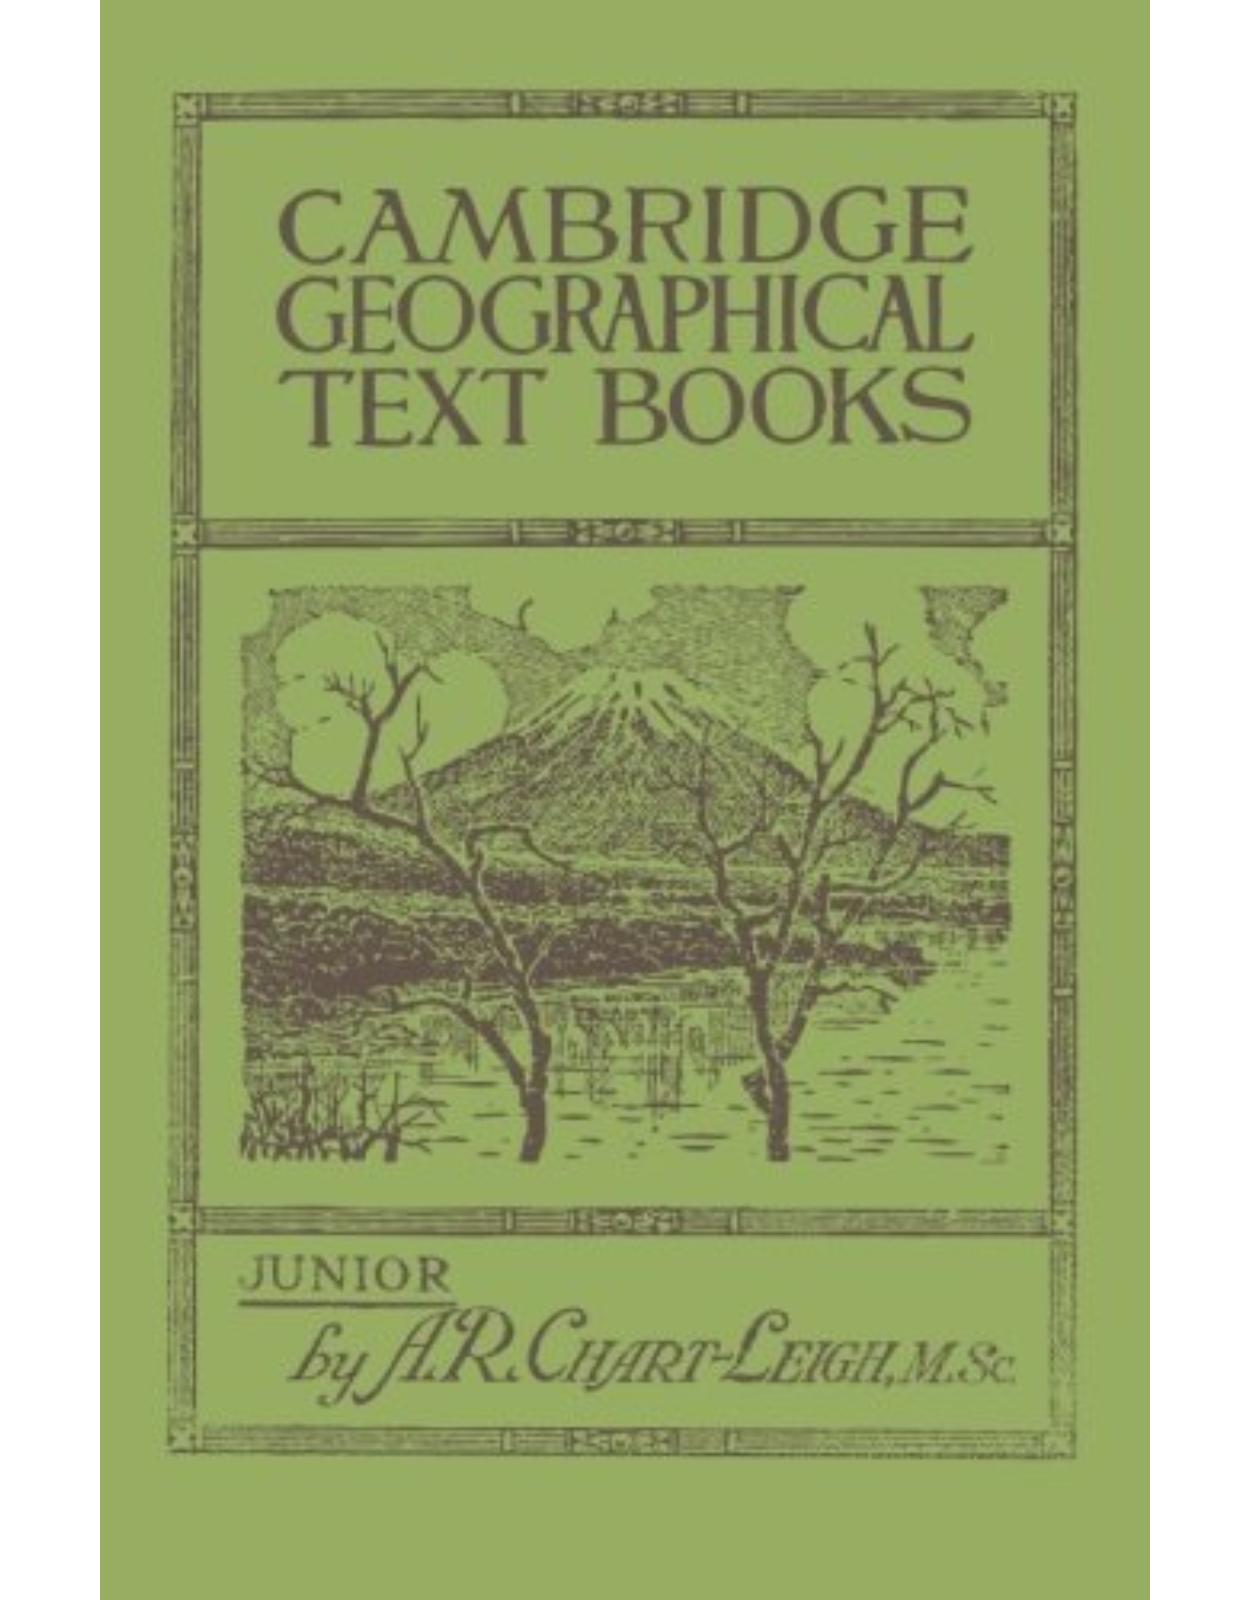 Cambridge Geographical Text Books: Junior